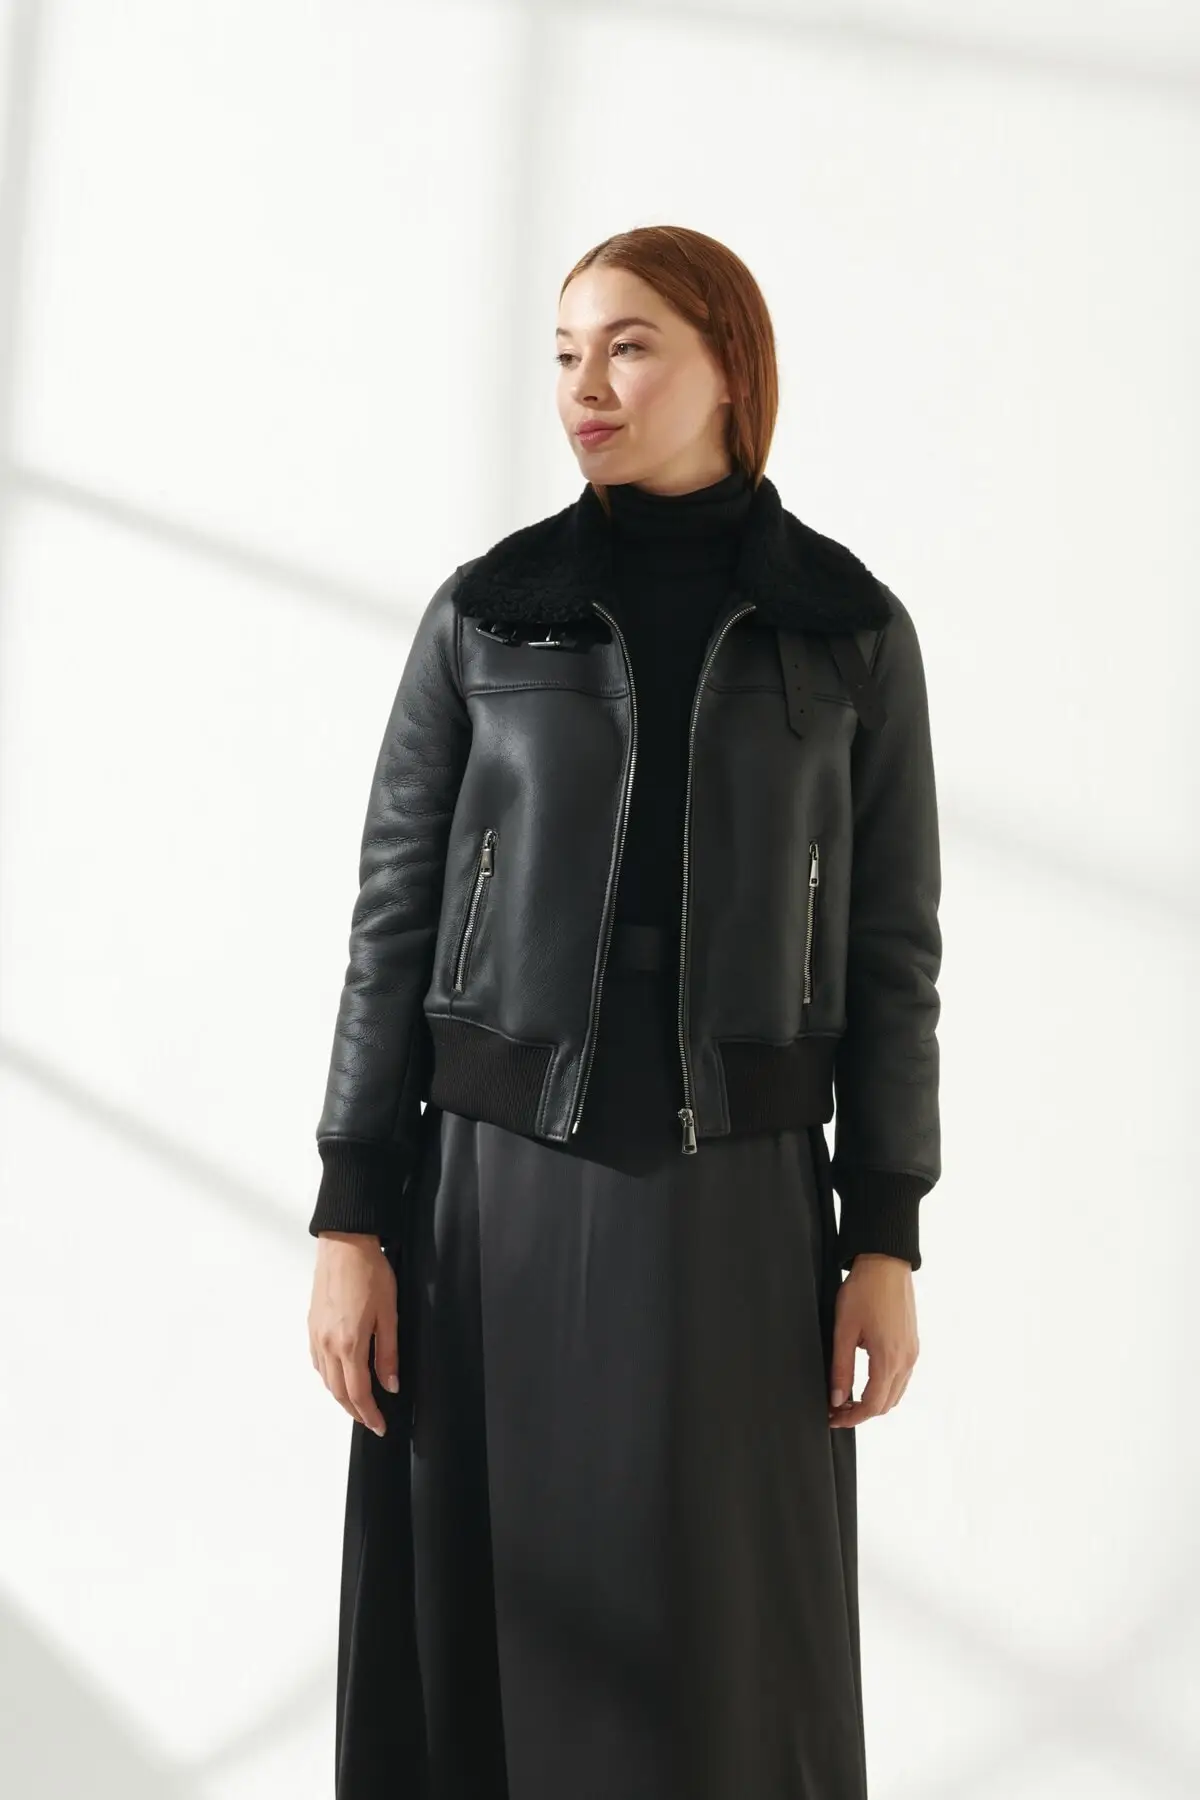 Women's Sports Black Leather Jacket with Fur black Winter Genuine Sheepskin Wool Coats Biker Jacket Models Slim Fit Parka